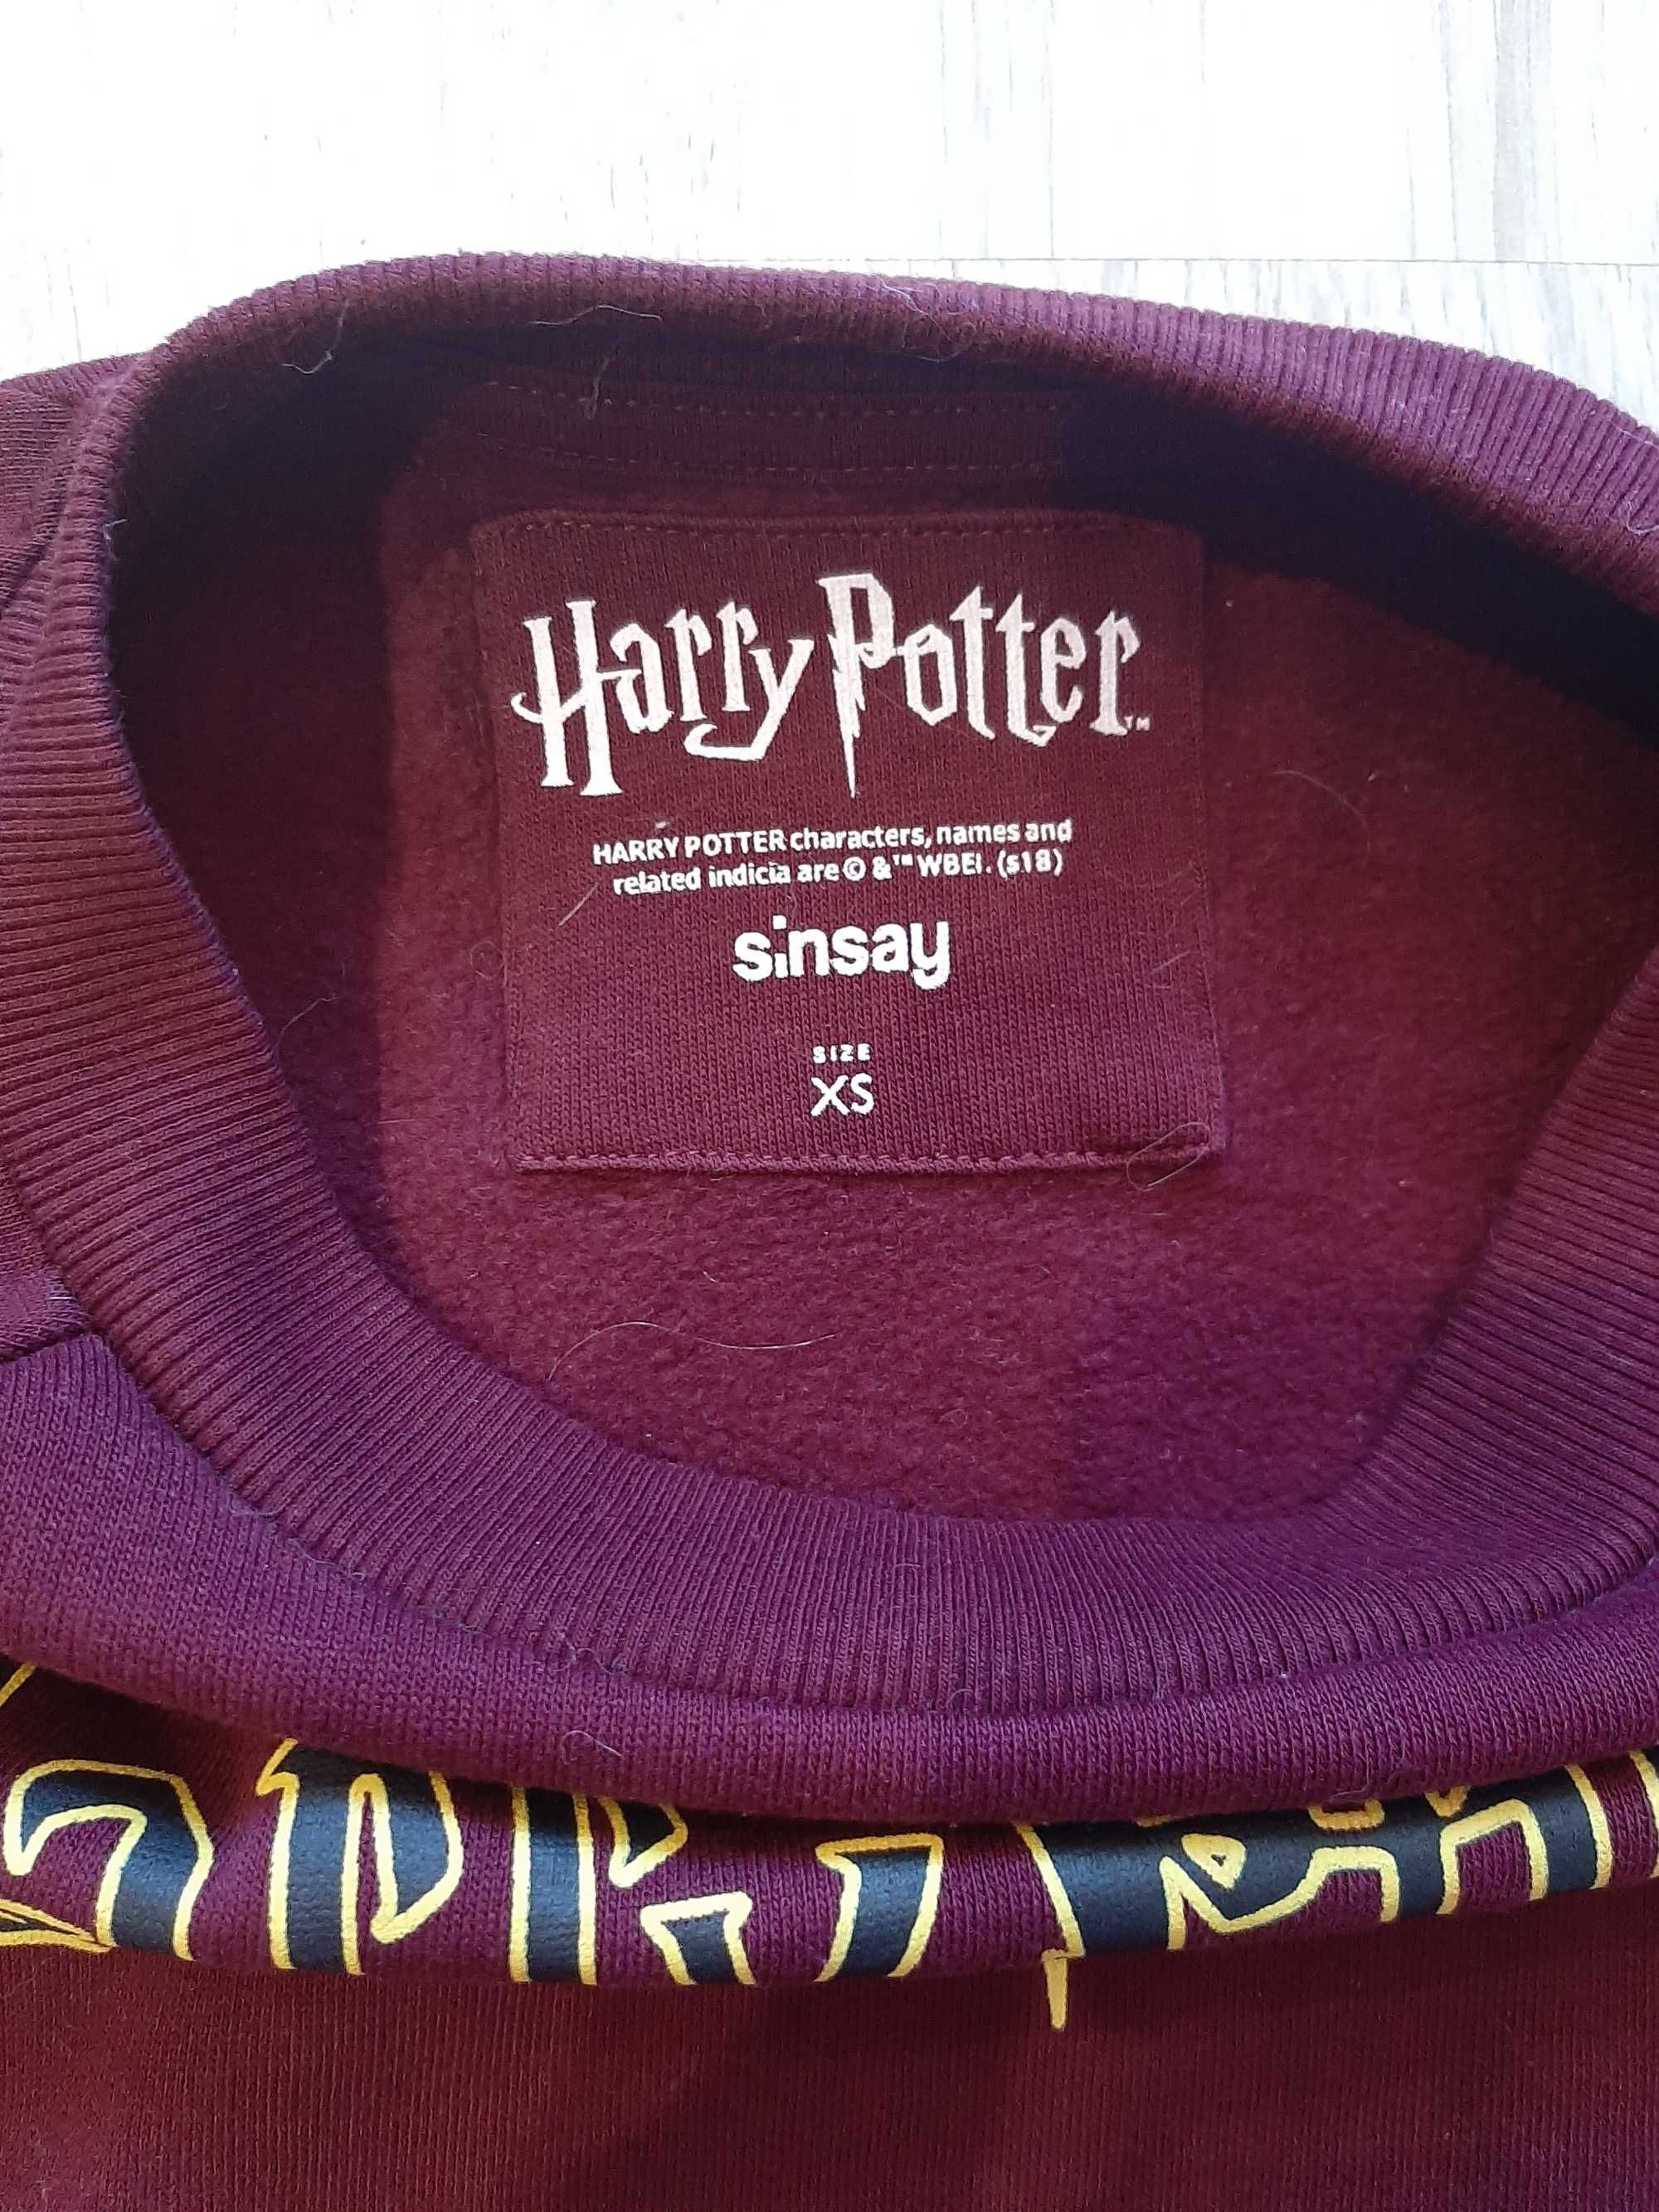 Bordowa bluza croptop Harry Potter Sinsay XS